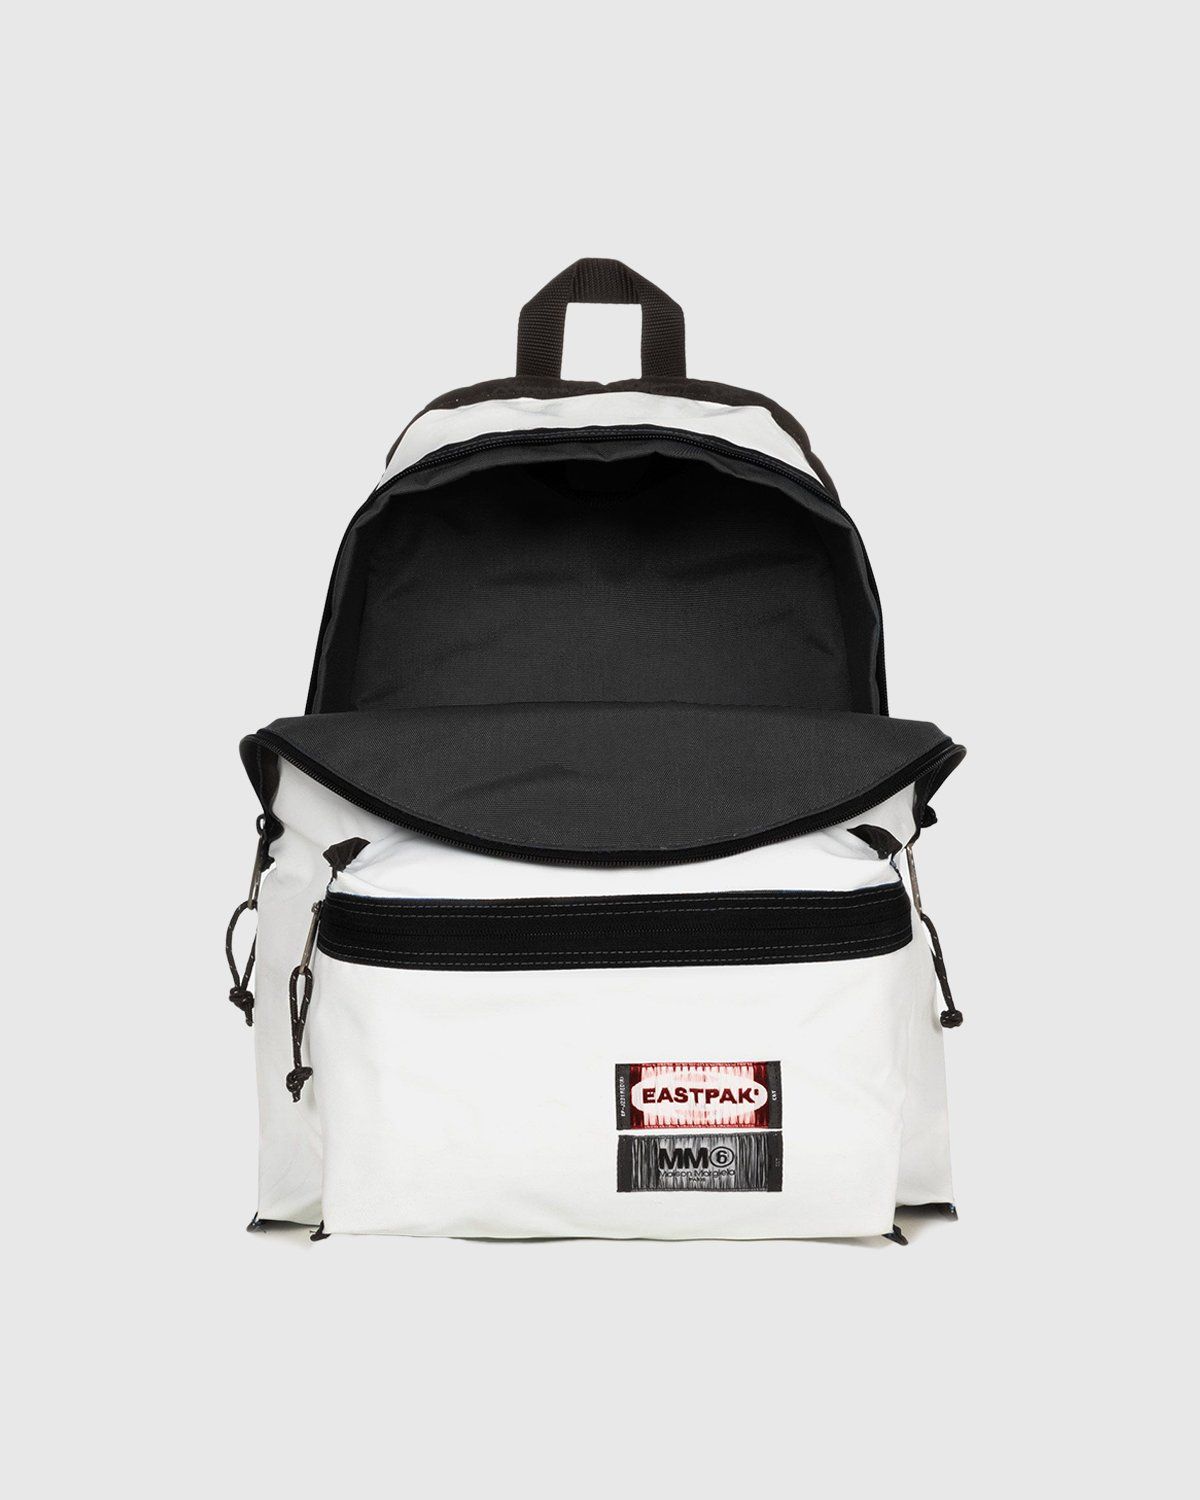 MM6 Maison Margiela x Eastpak – Padded Backpack Black - Backpacks - Black - Image 5